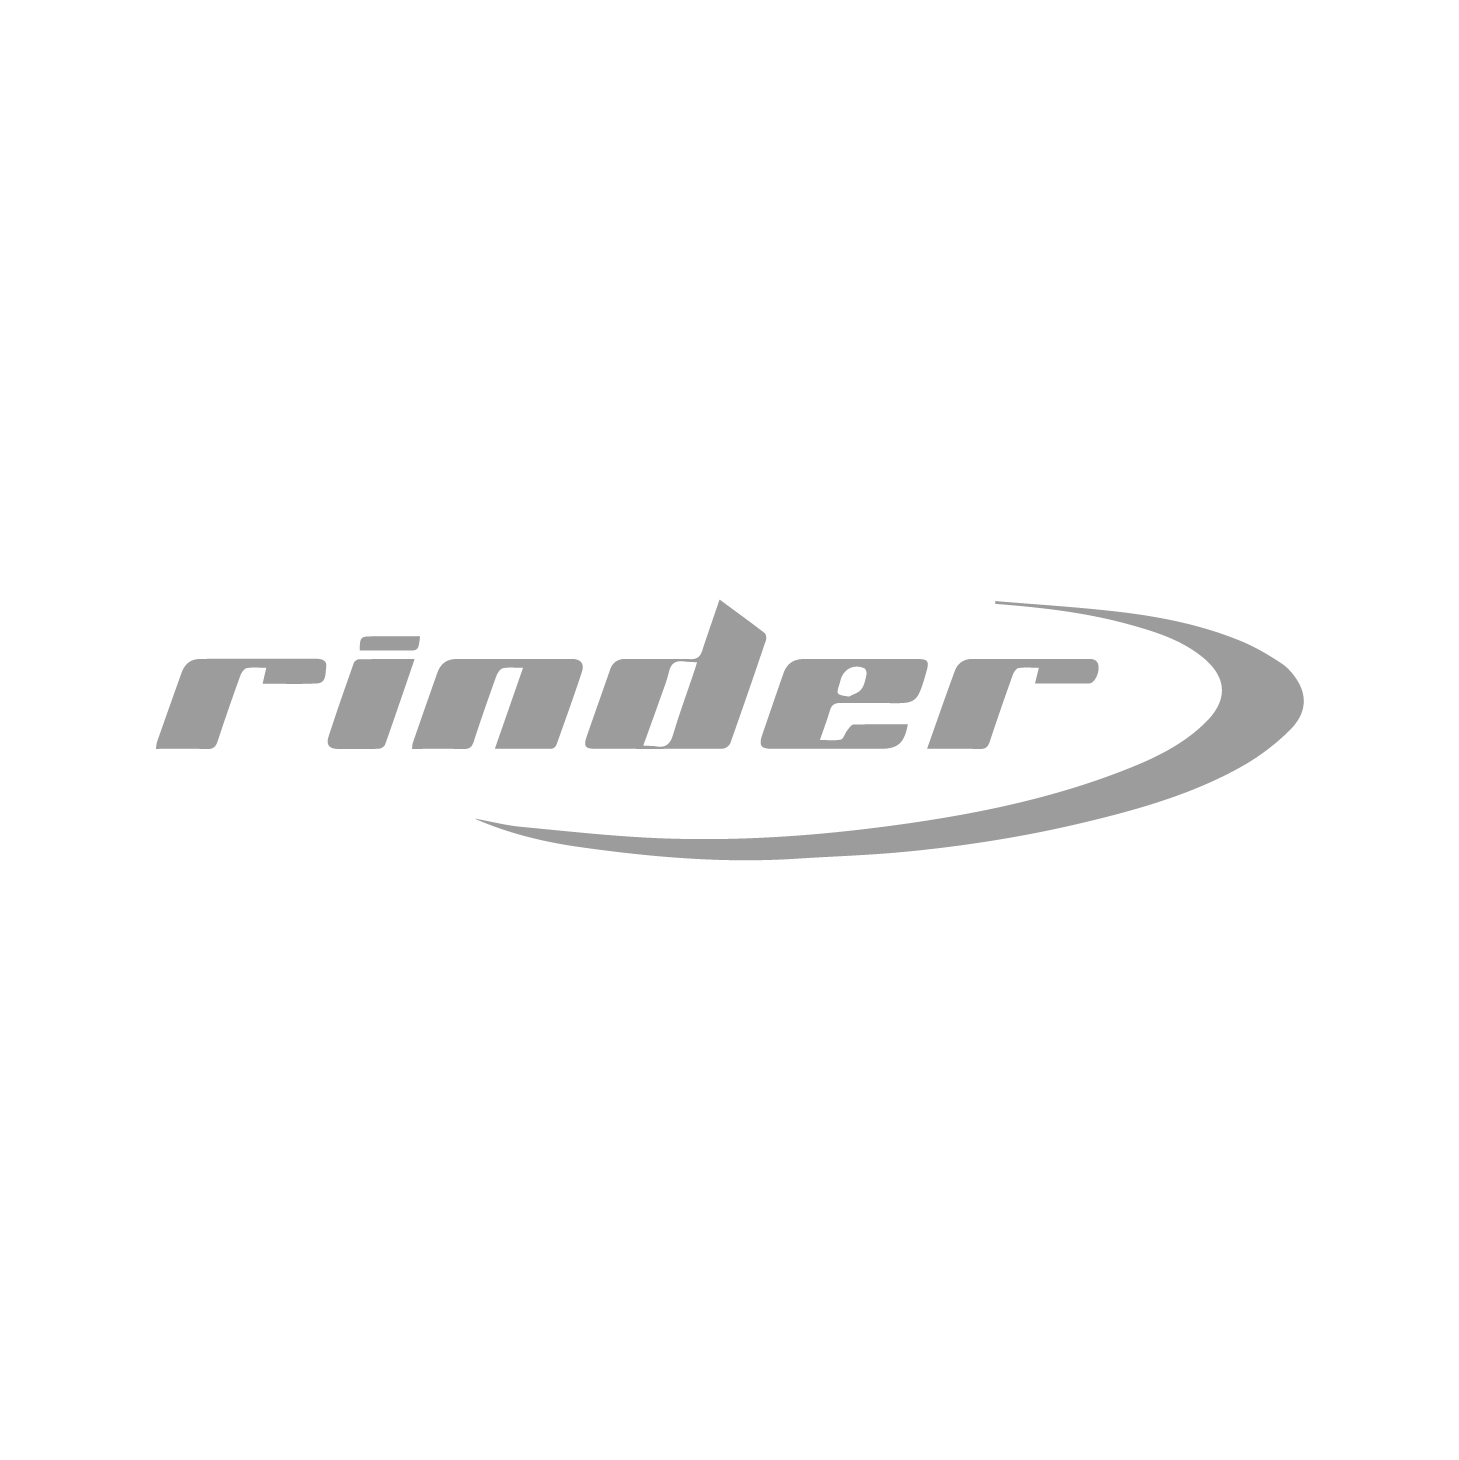 RINDER OK-a